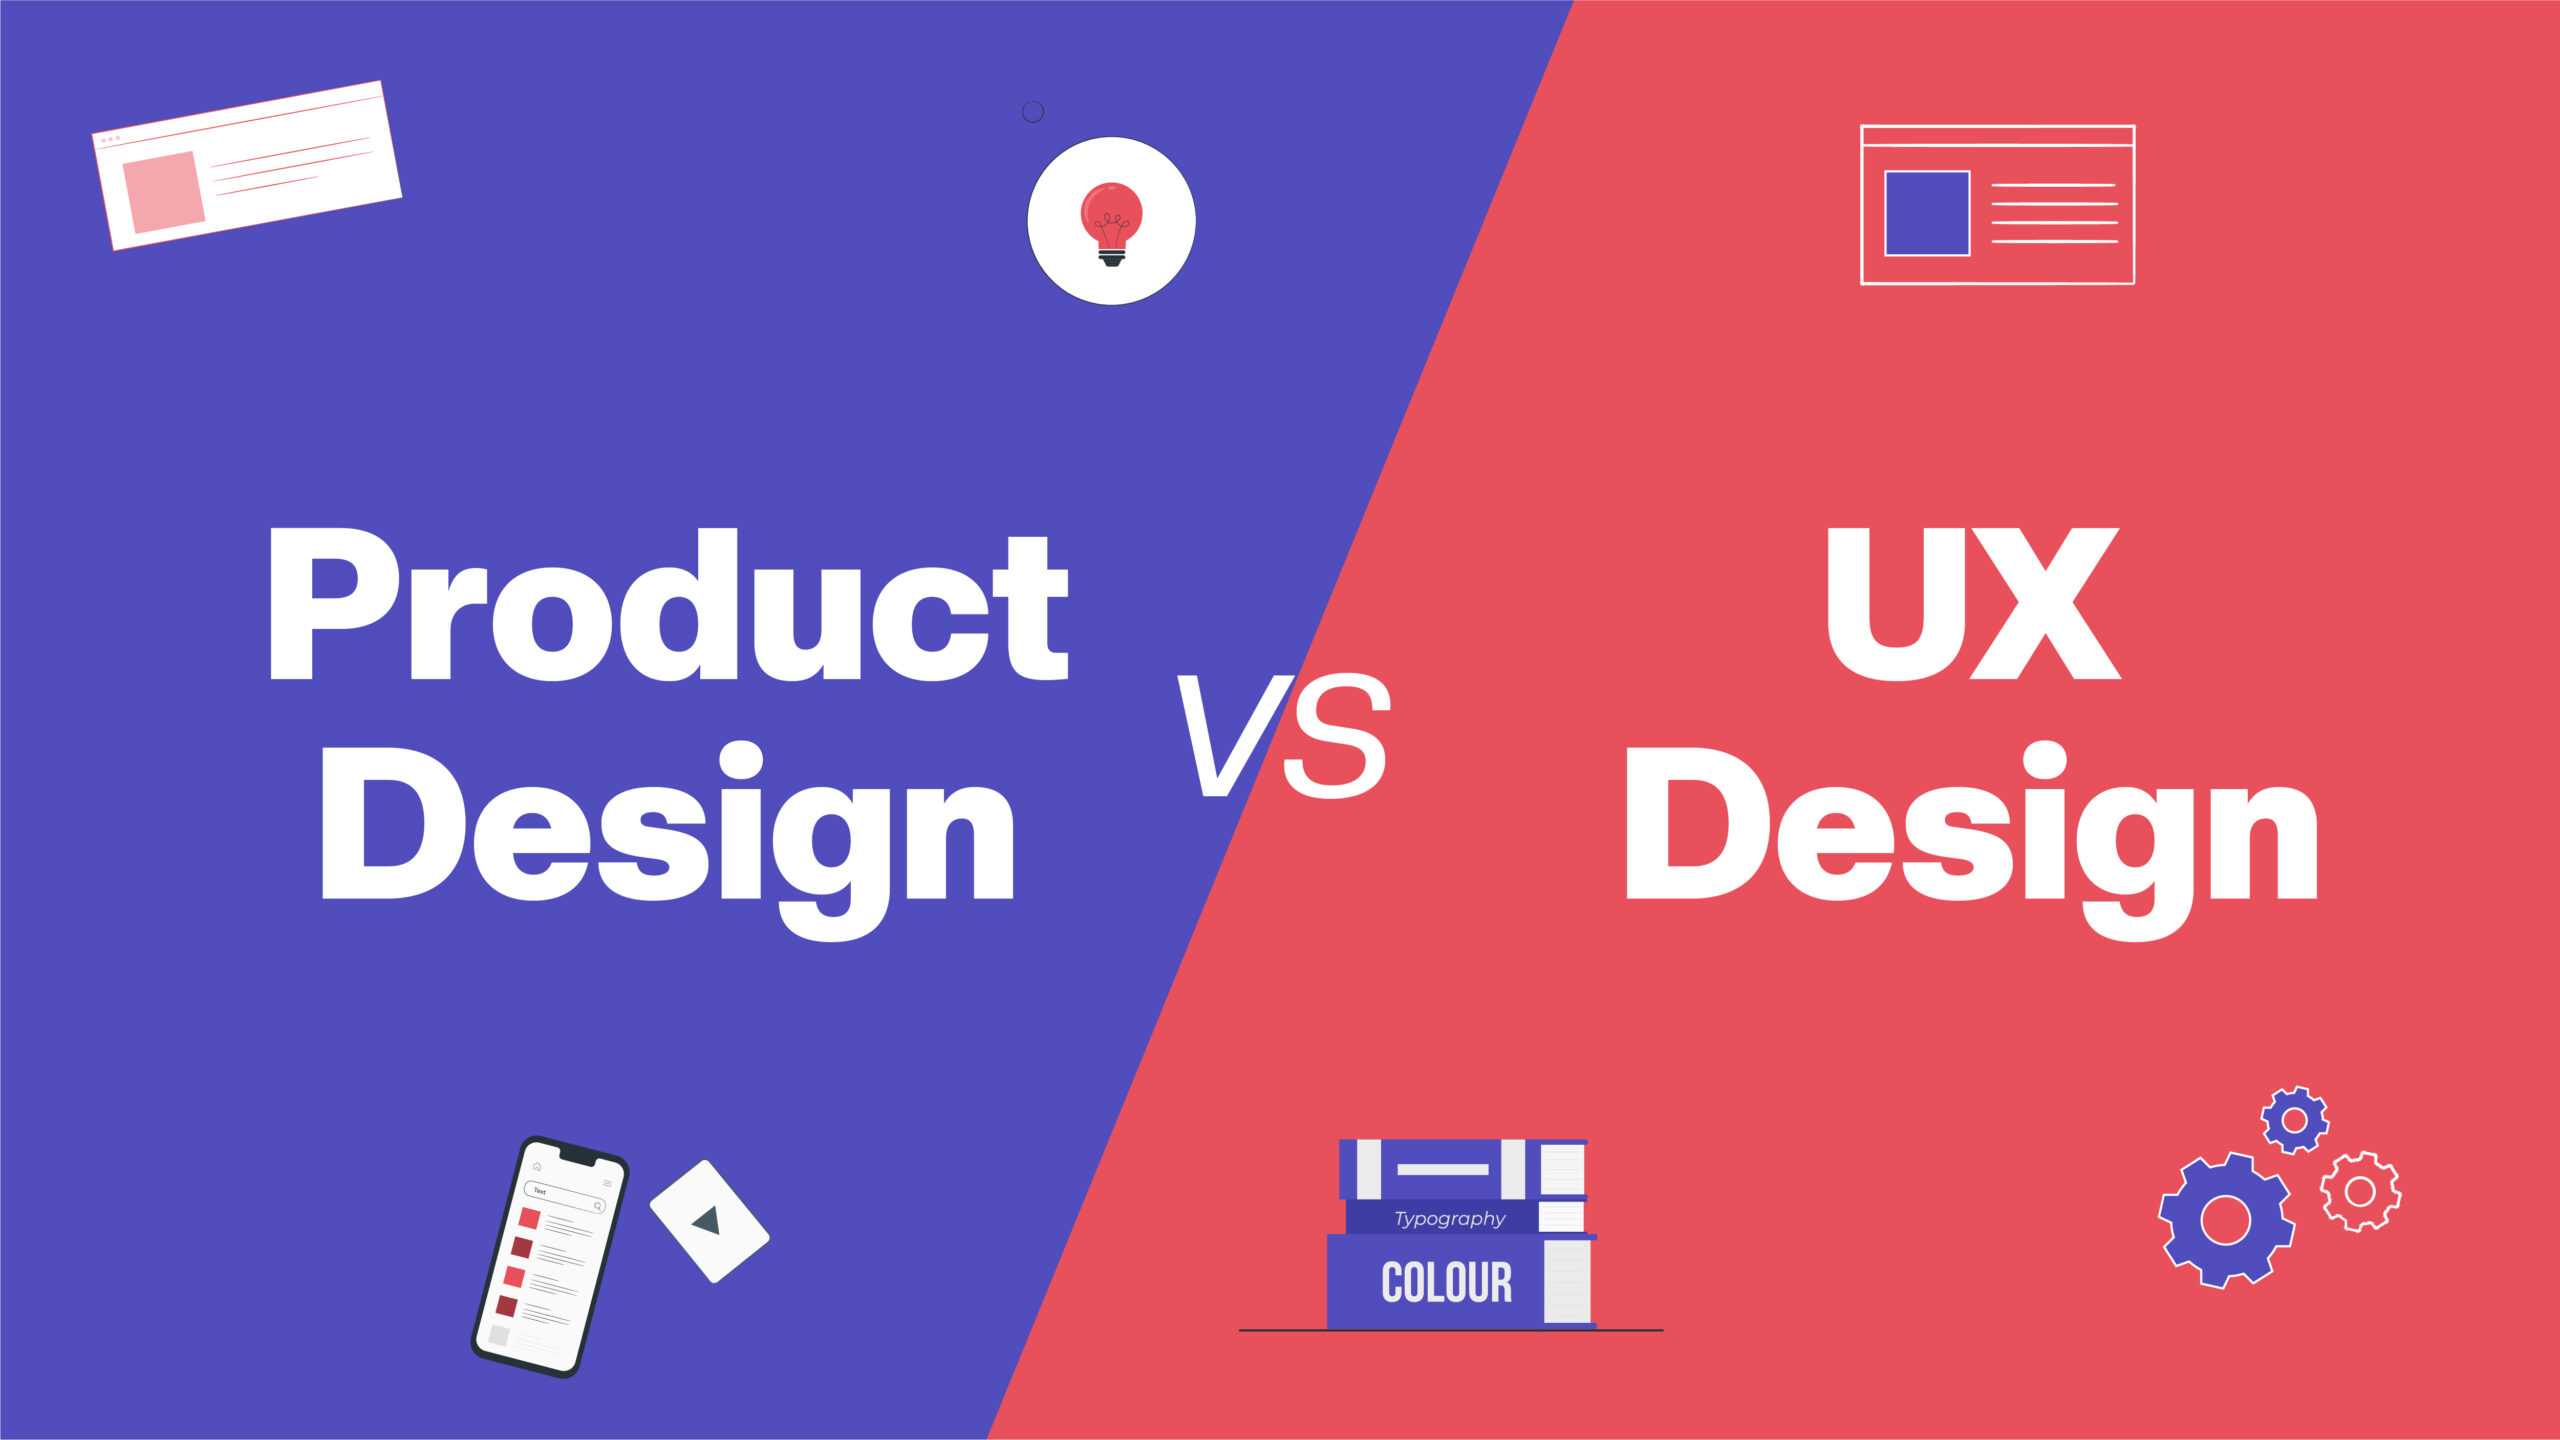 Product design vs UX design